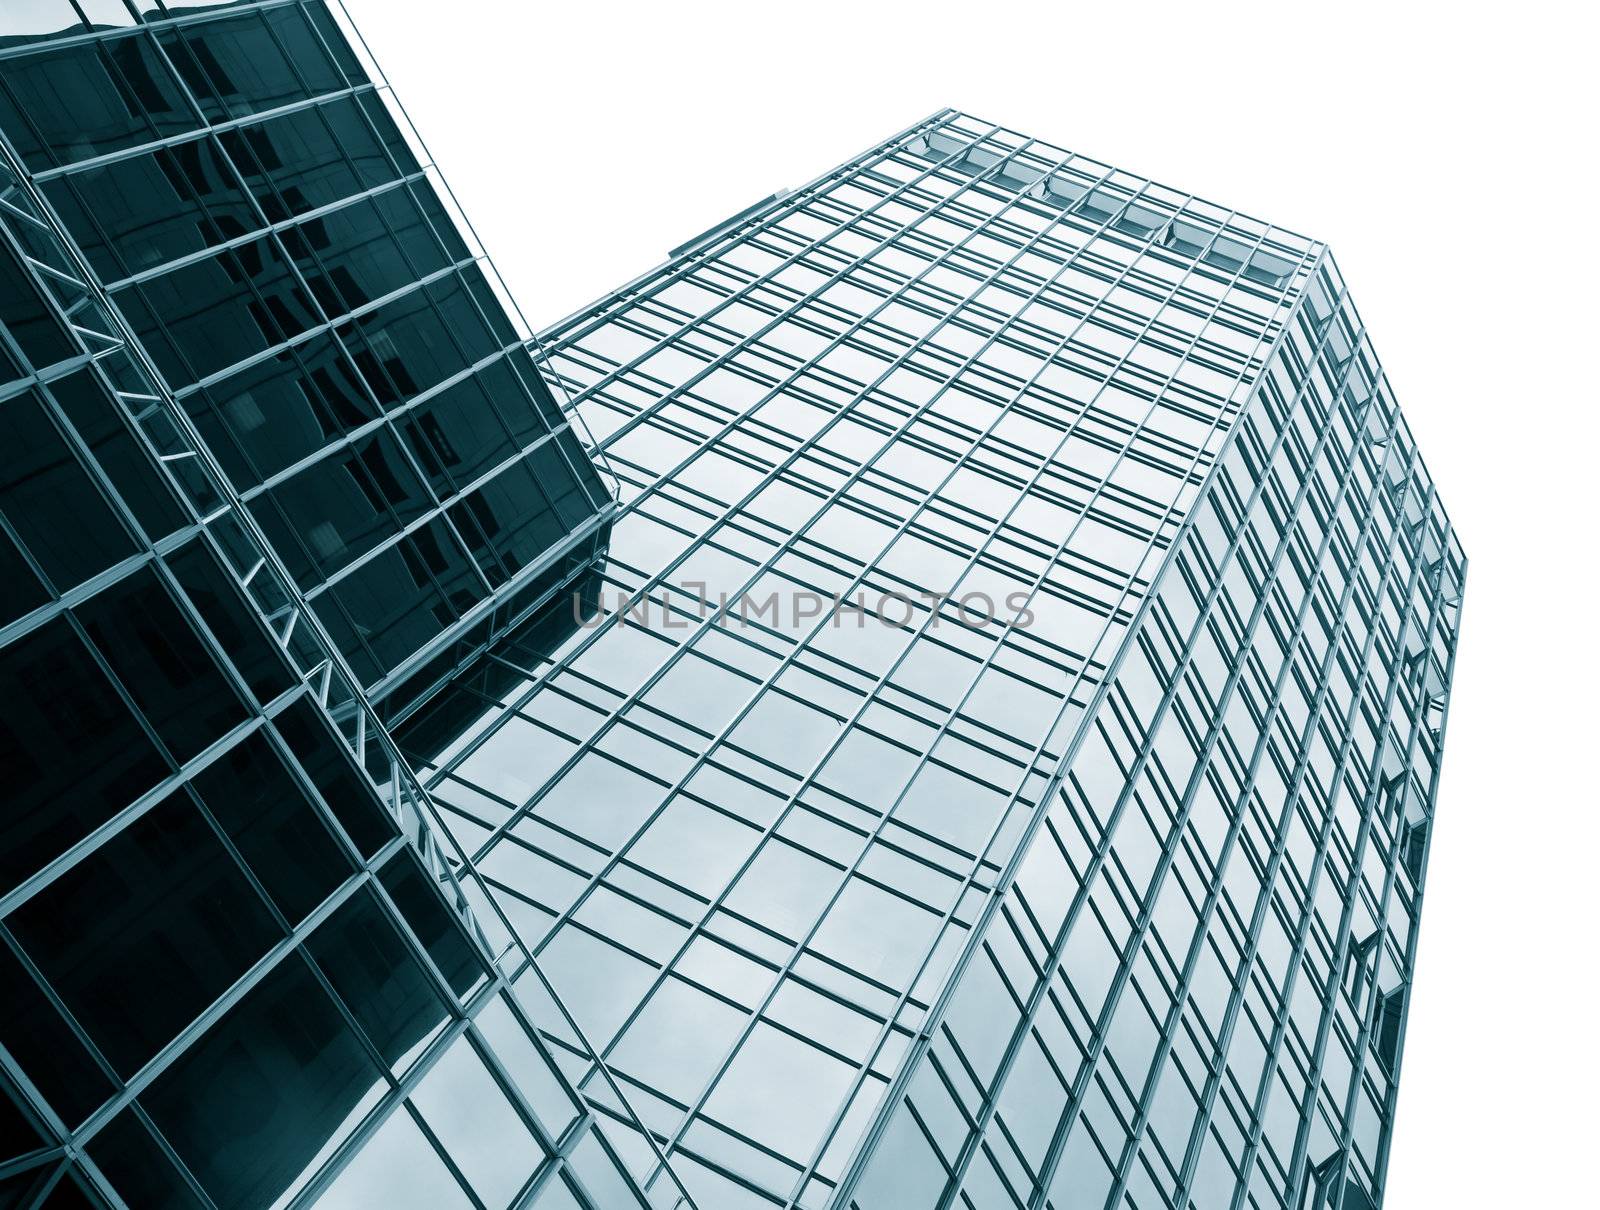 Modern office building glass facade toned